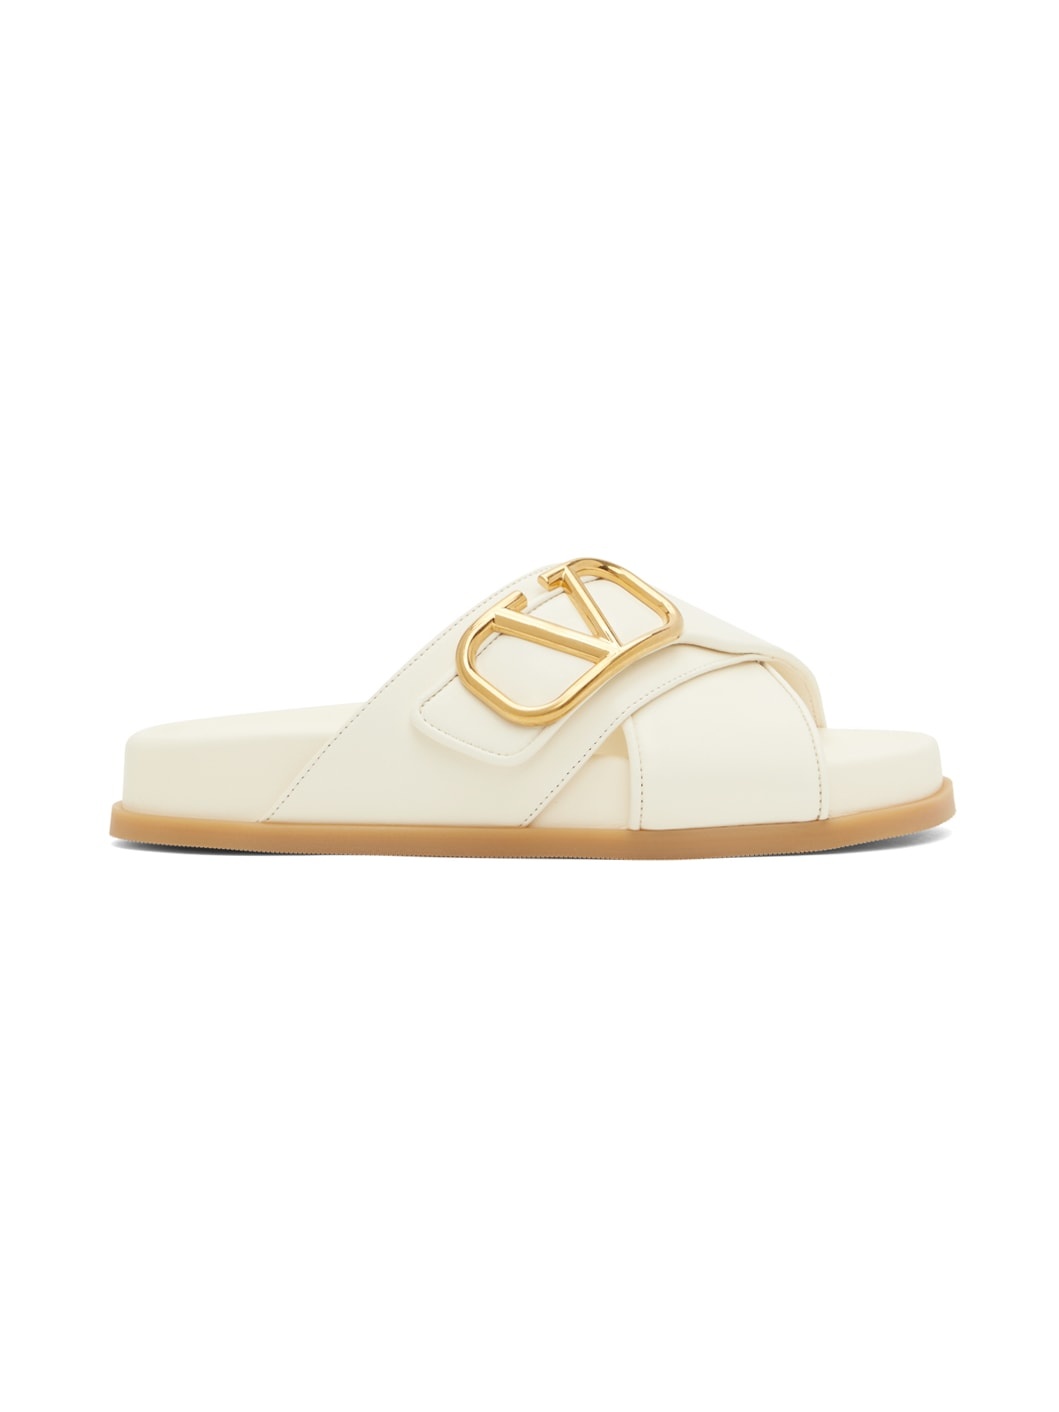 Off-White VLogo Sandals - 1